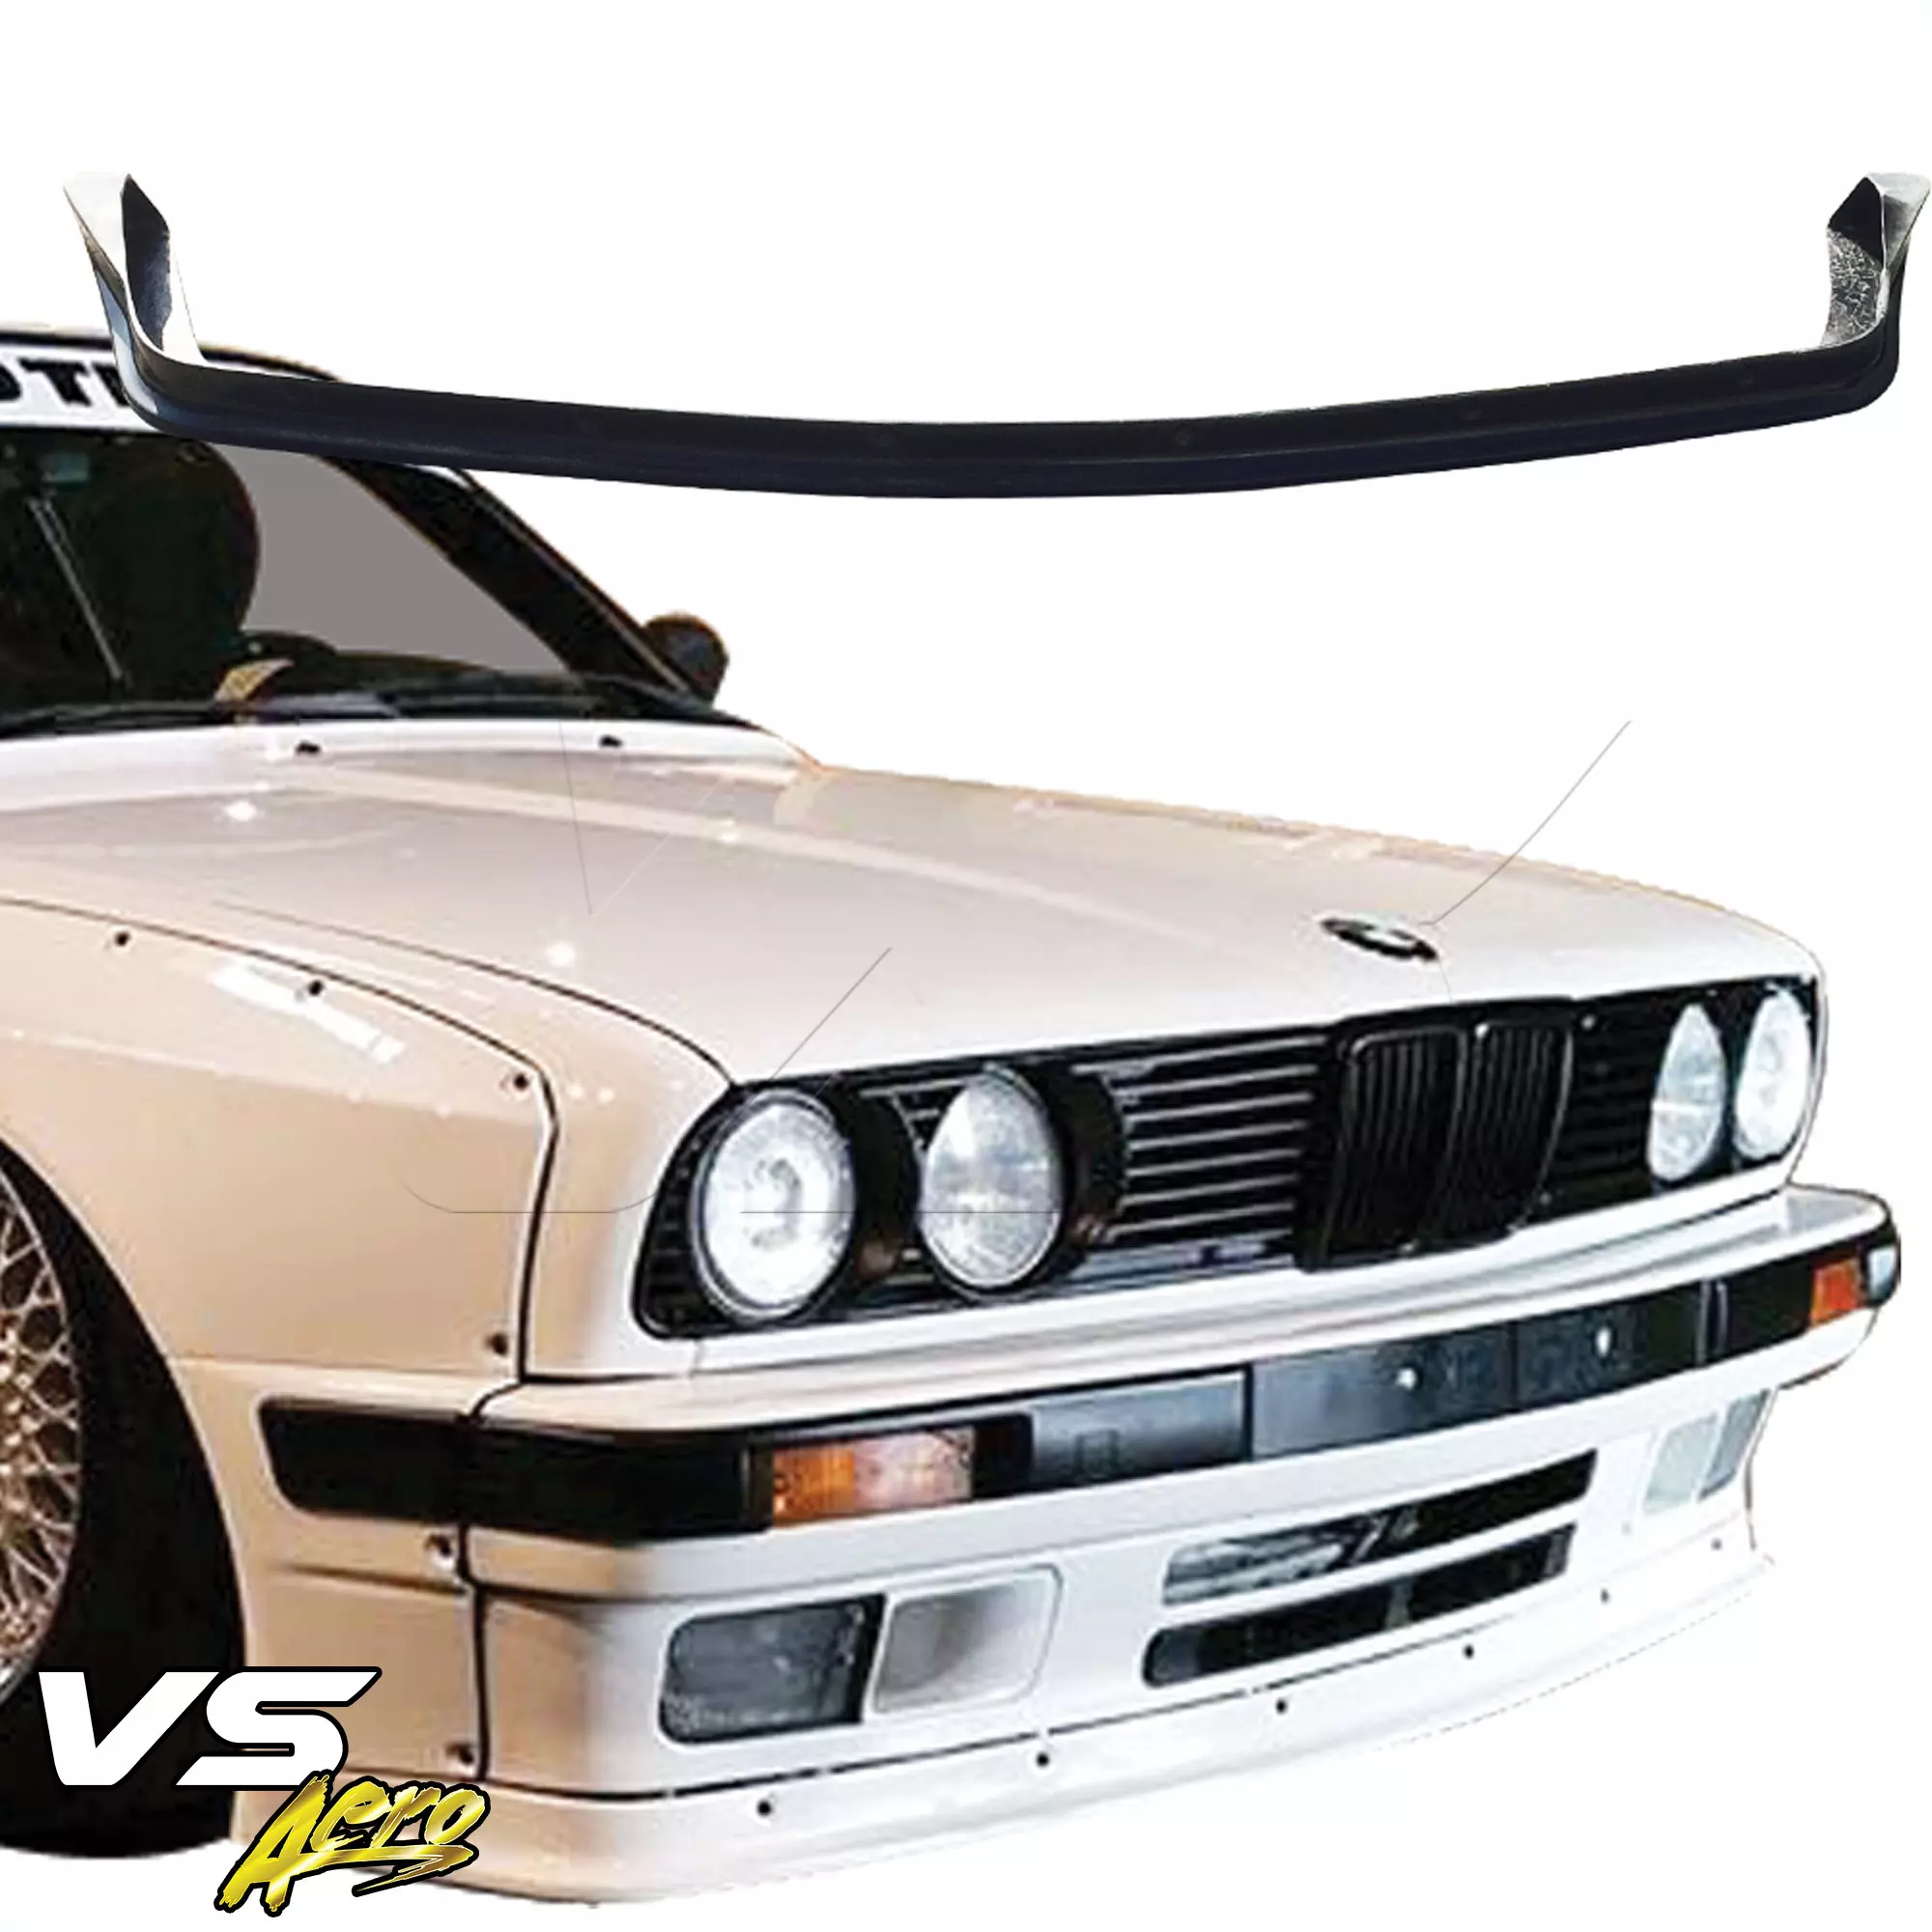 VSaero FRP TKYO Wide Body Kit w Wing 10pc > BMW 3-Series 318i 325i E30 1984-1991> 2dr Coupe - Image 3